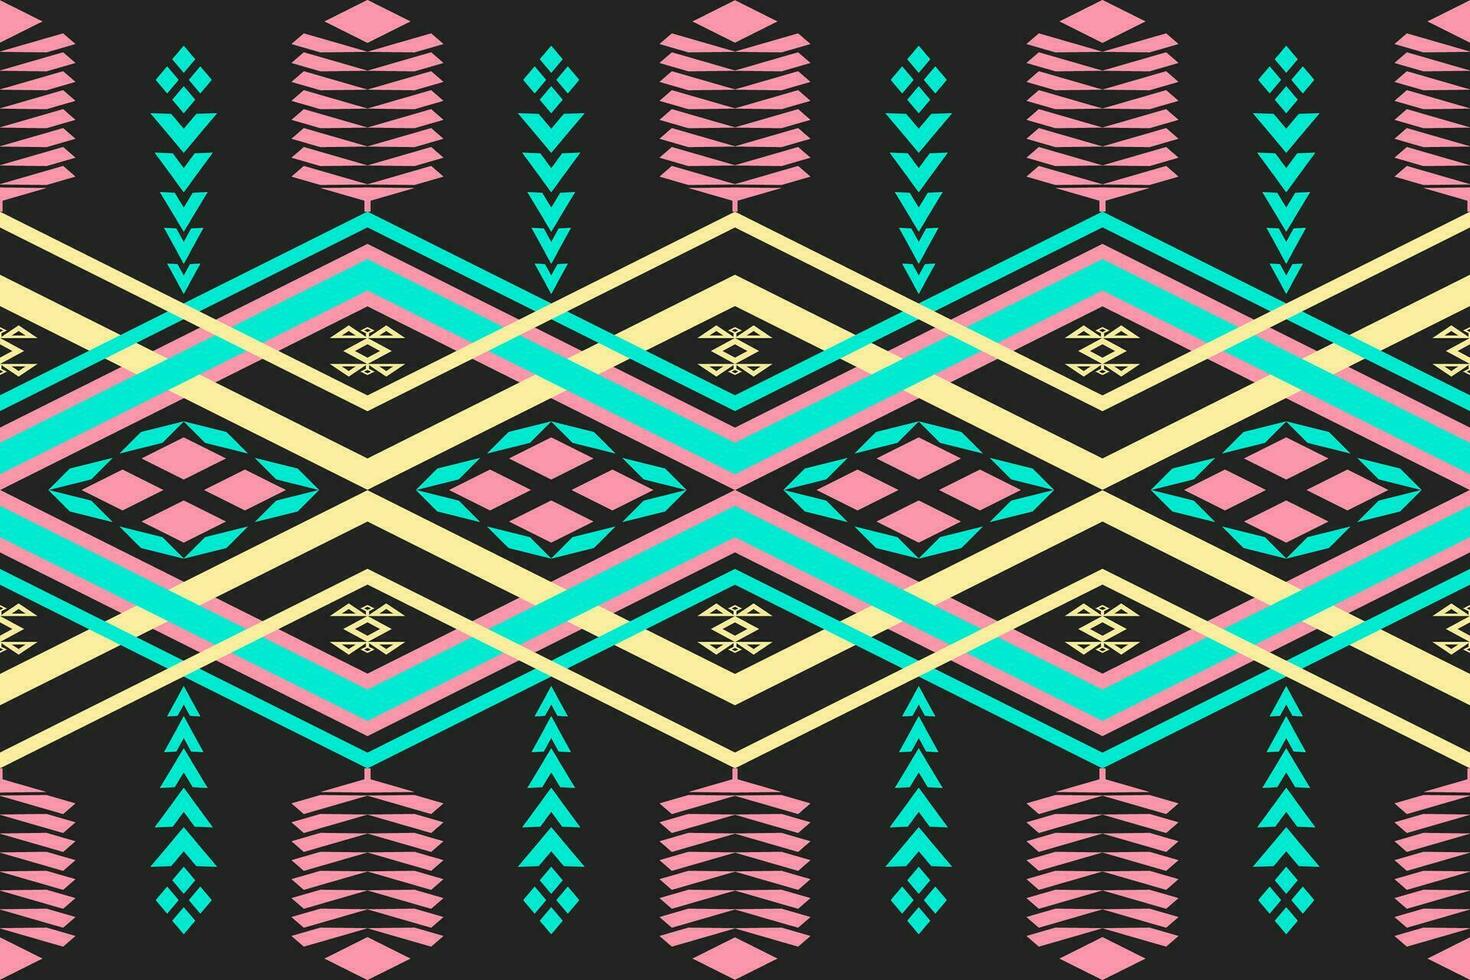 étnico asteca geométrico padronizar para vibrante cor.colorido geométrico bordado para têxteis,tecido,vestuário,plano de fundo,batik,malhas vetor